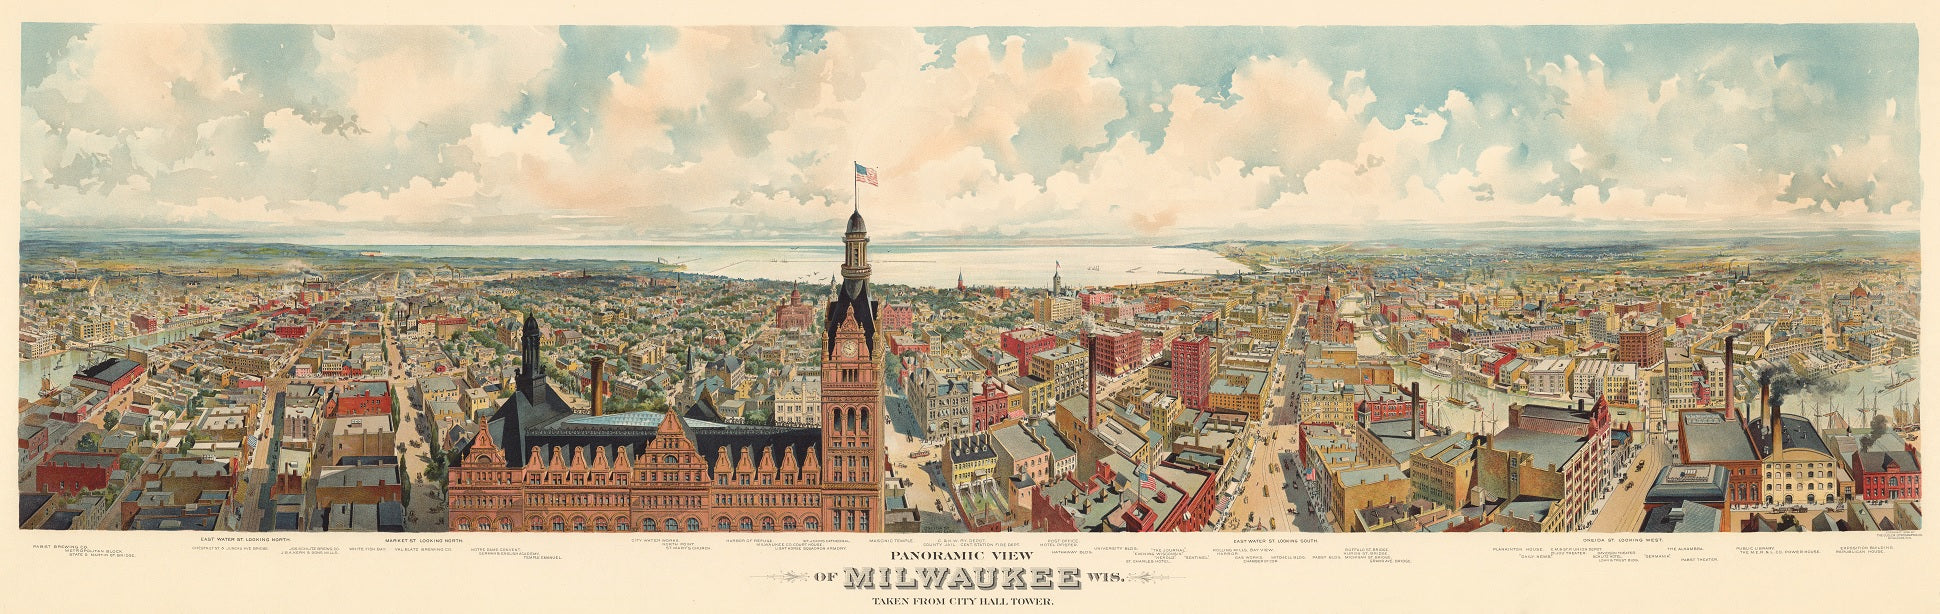 OhMyGrid custom grid wall art Milwaukee panoramic 1898